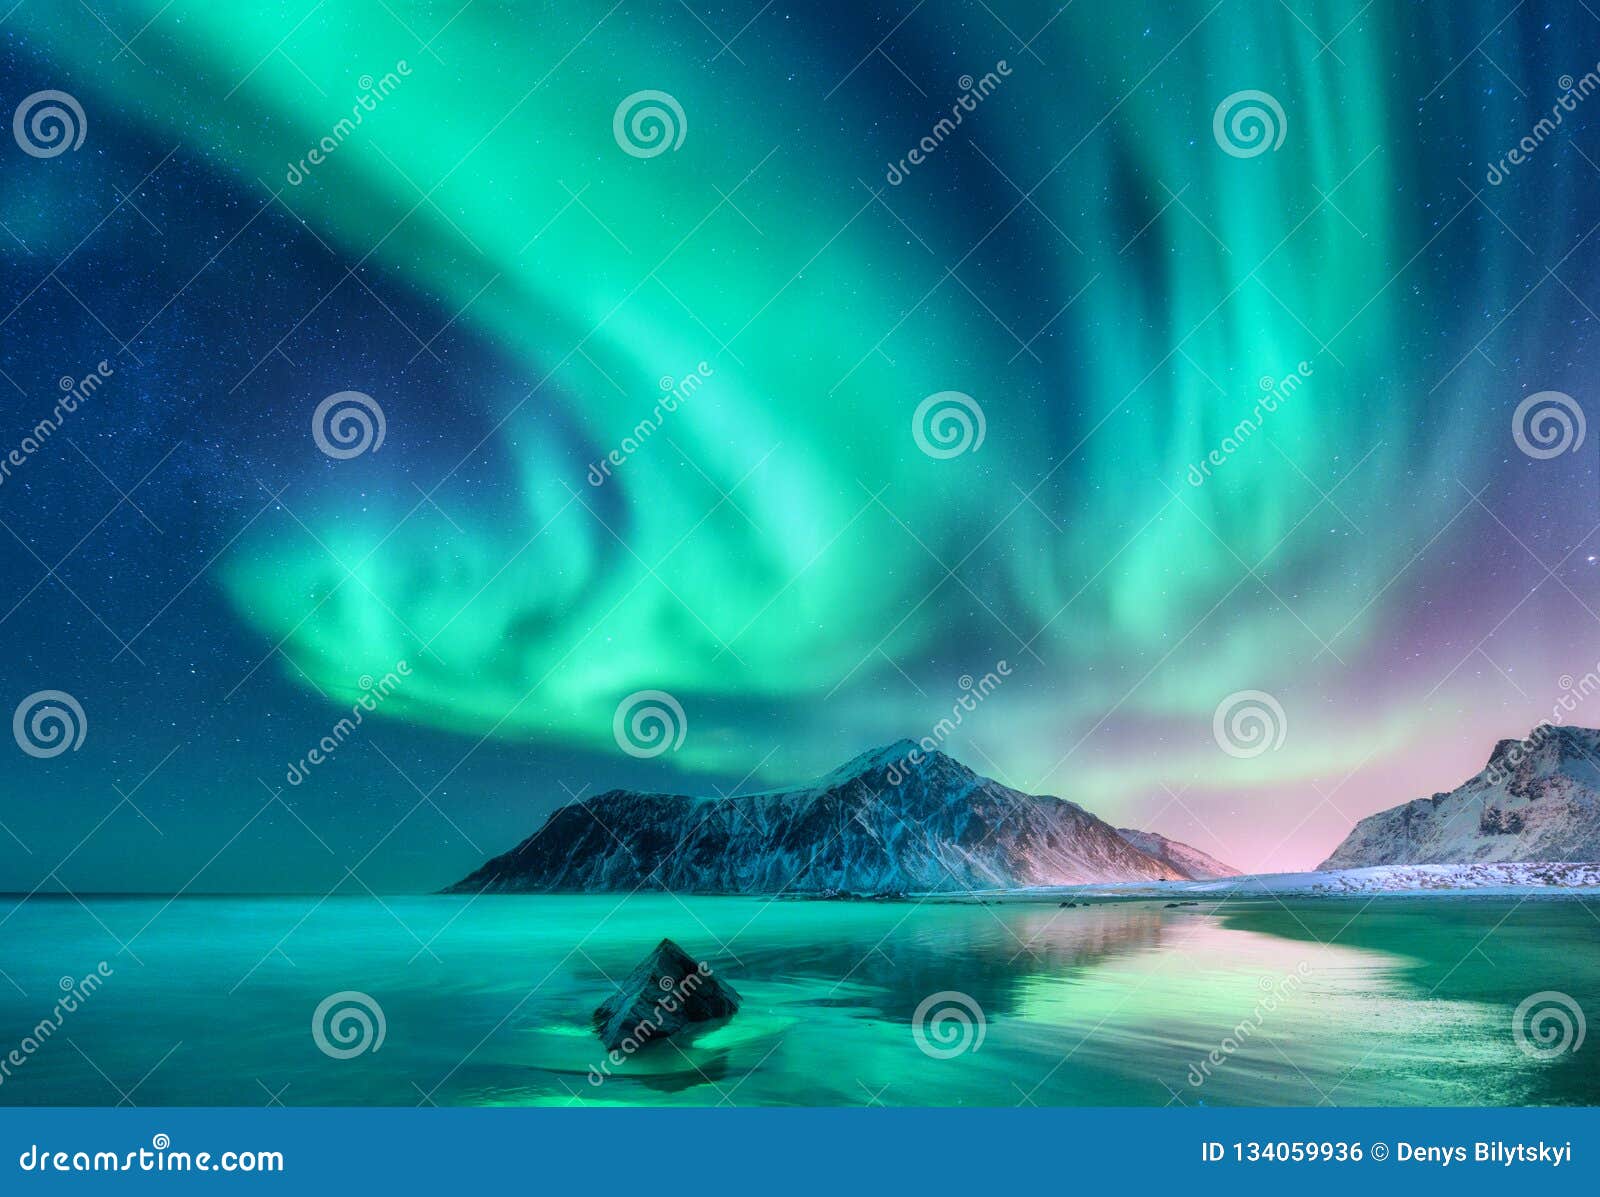 aurora borealis. northern lights in lofoten islands, norway